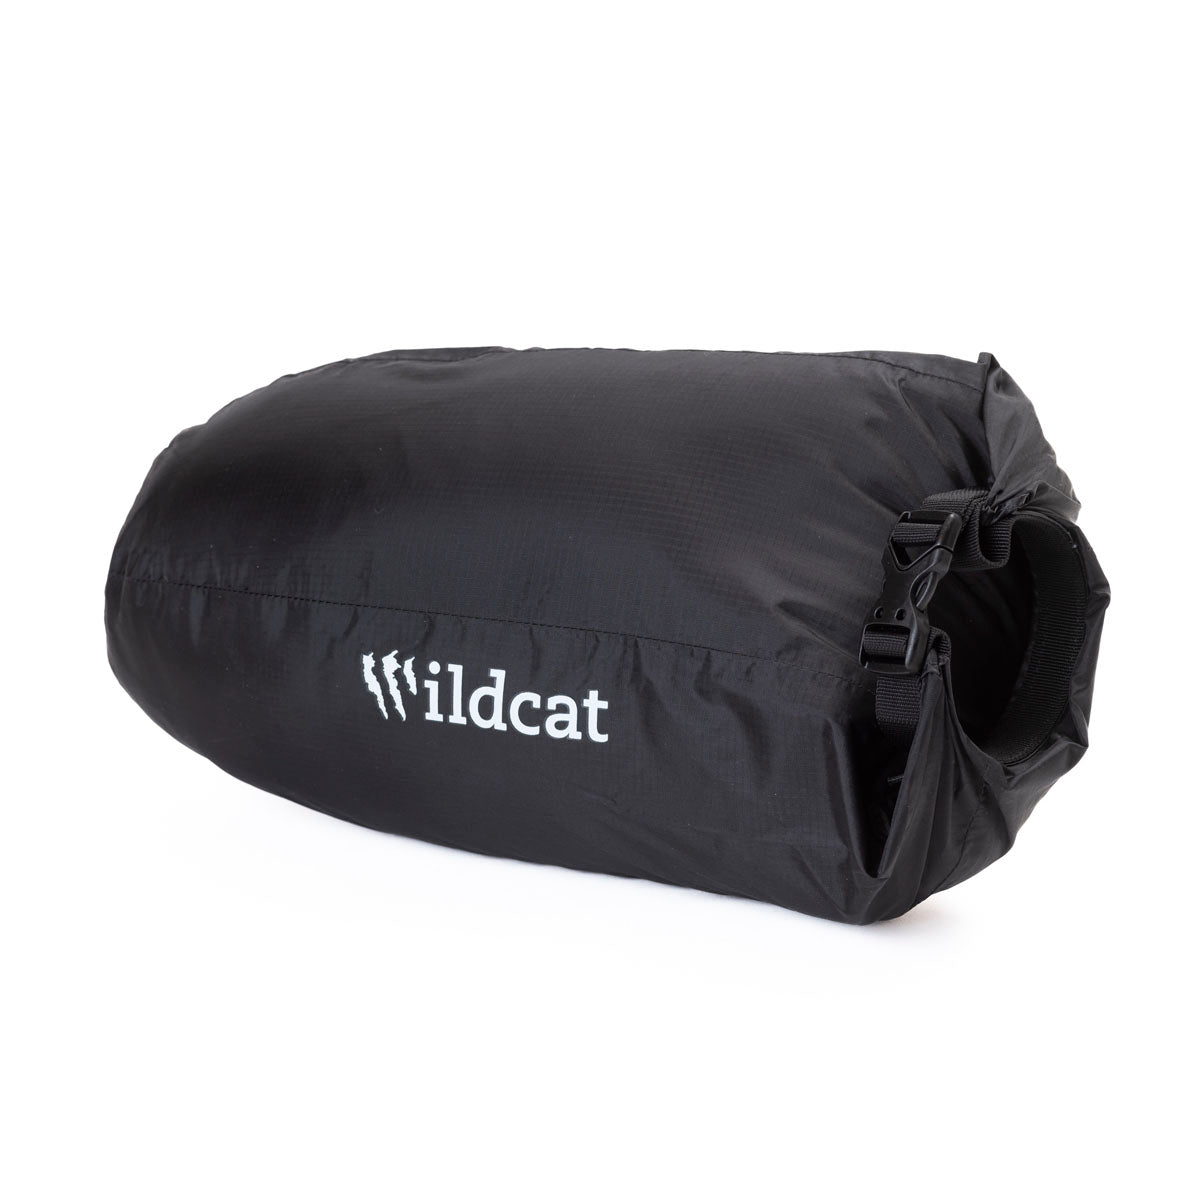 wildcat-tapered-drybag-7L-black